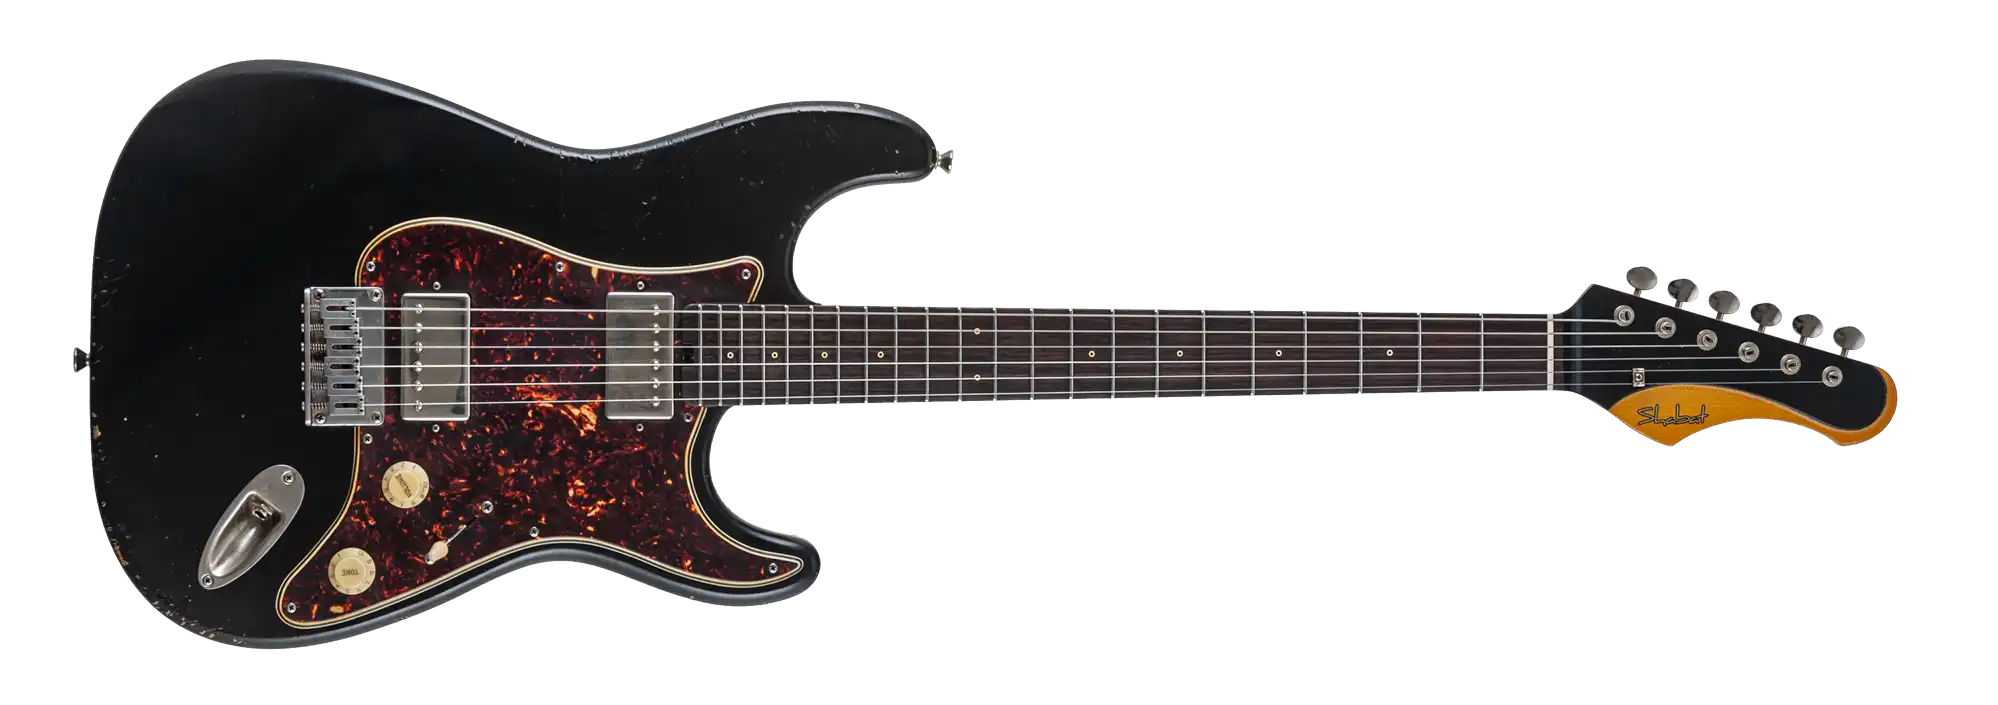 Shabat Guitars Lynx Standard HH Hardtail, black 